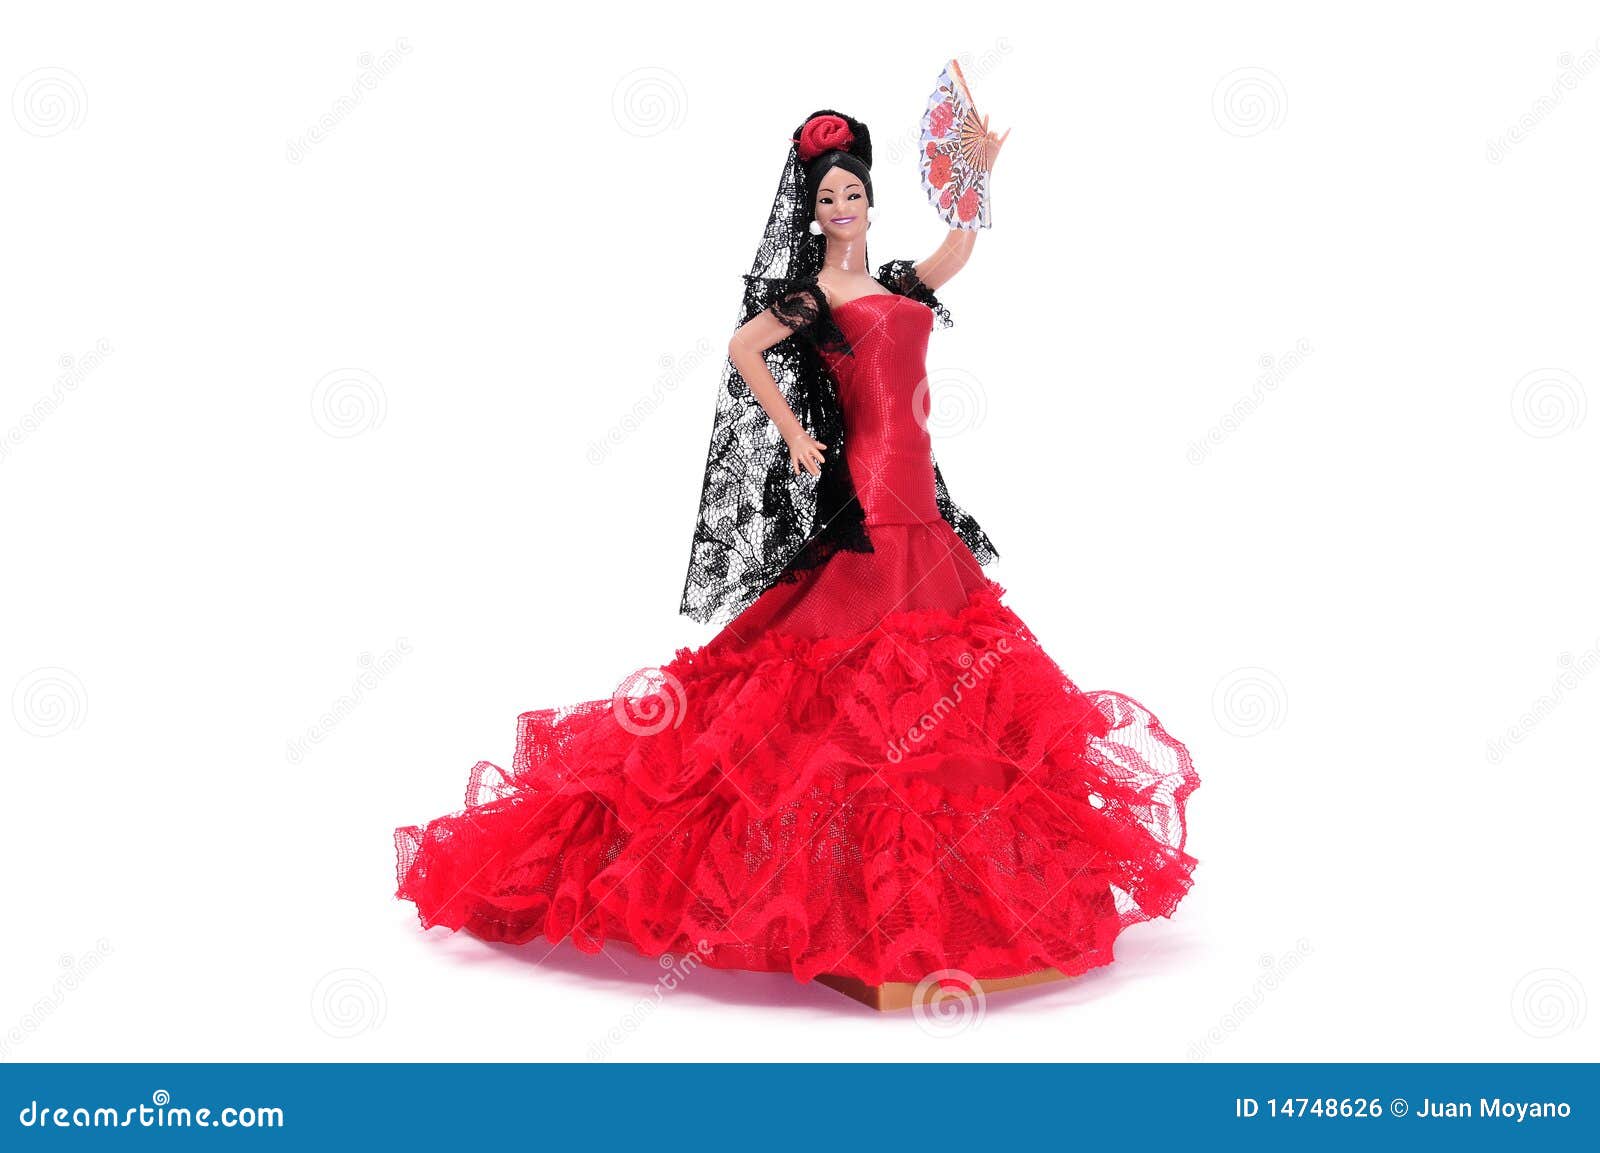 flamenca doll